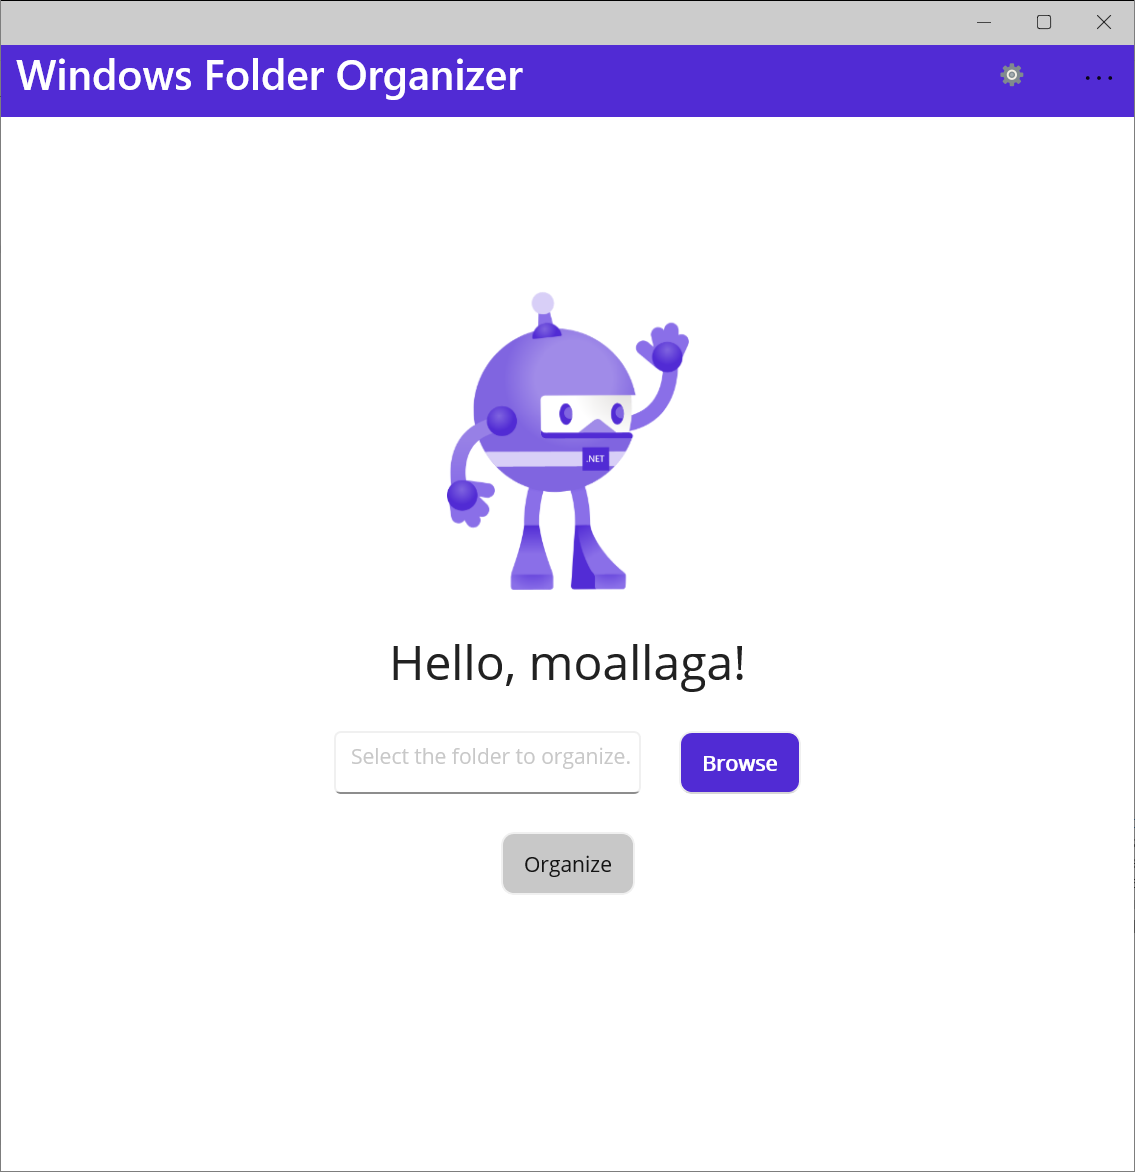 Windows Folder Organizer